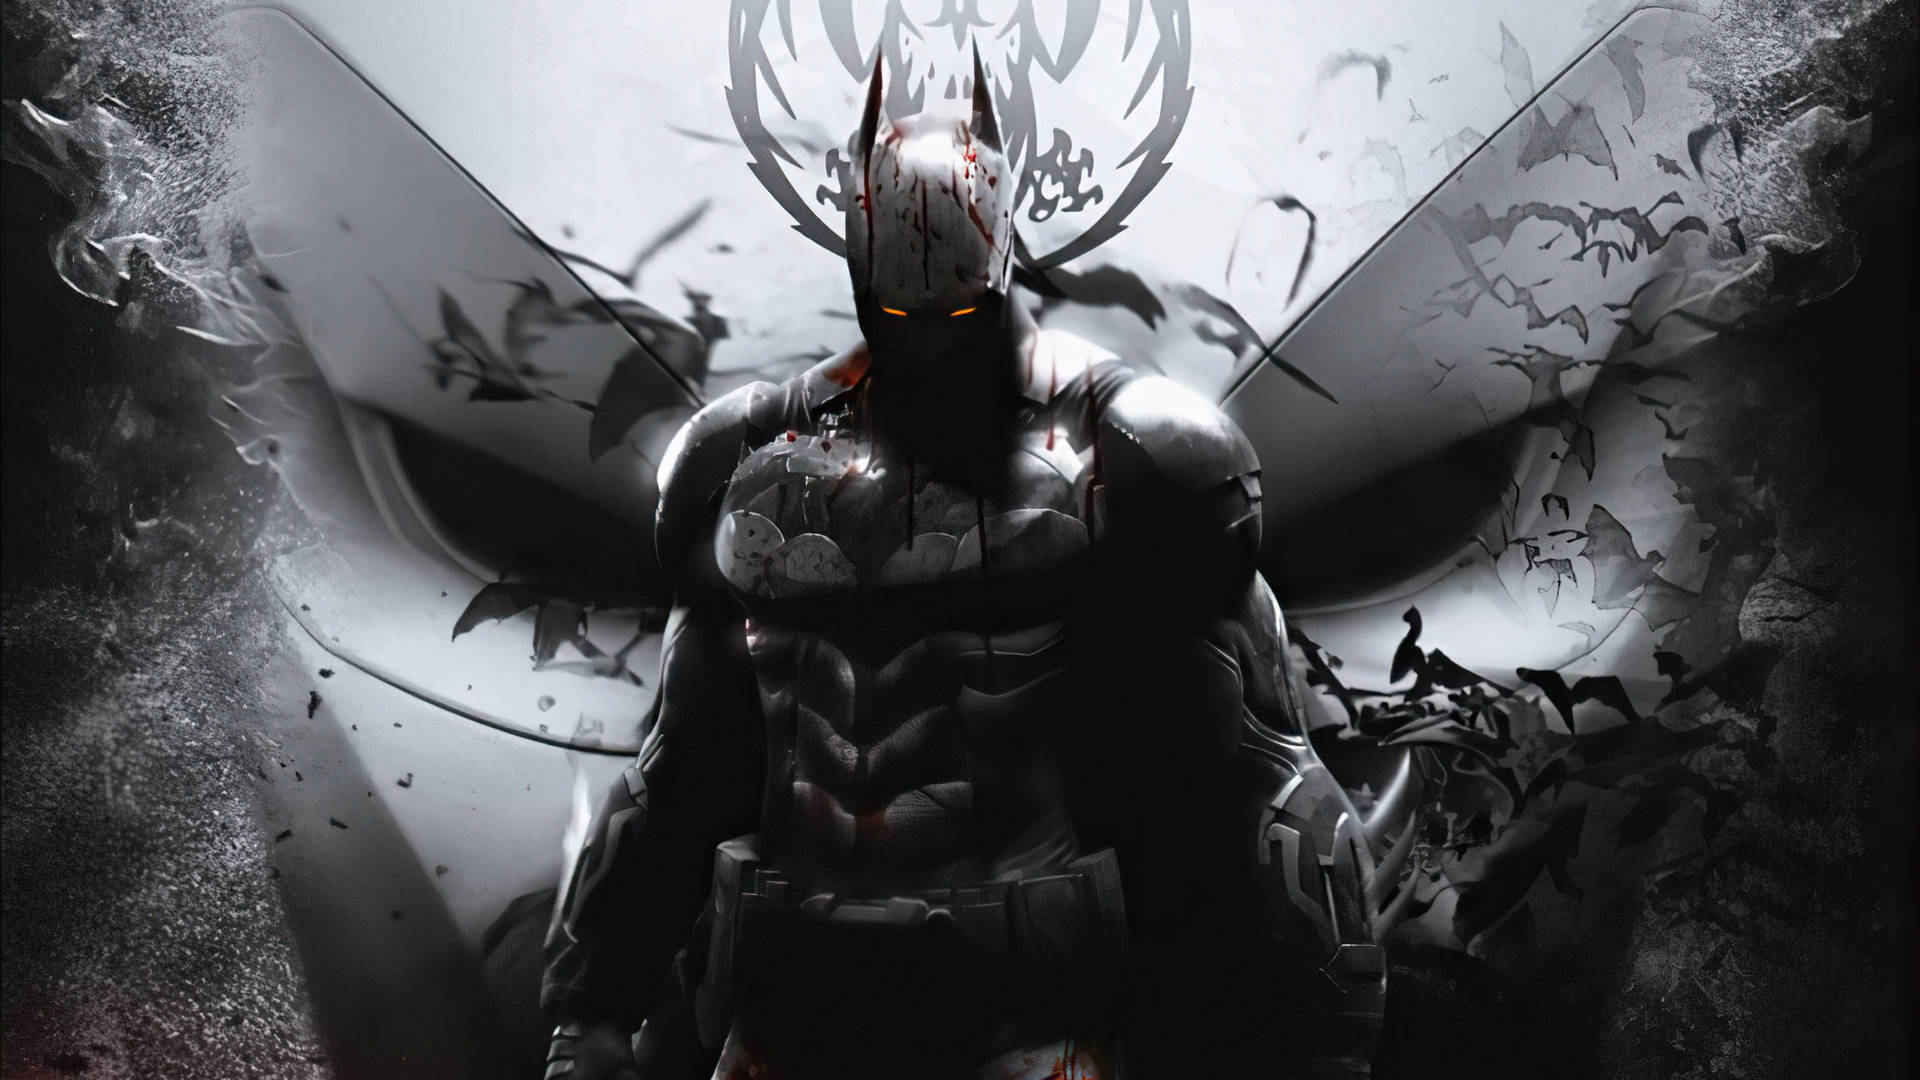 The Dark Knight Rises - An Epic Image of Batman Wallpaper